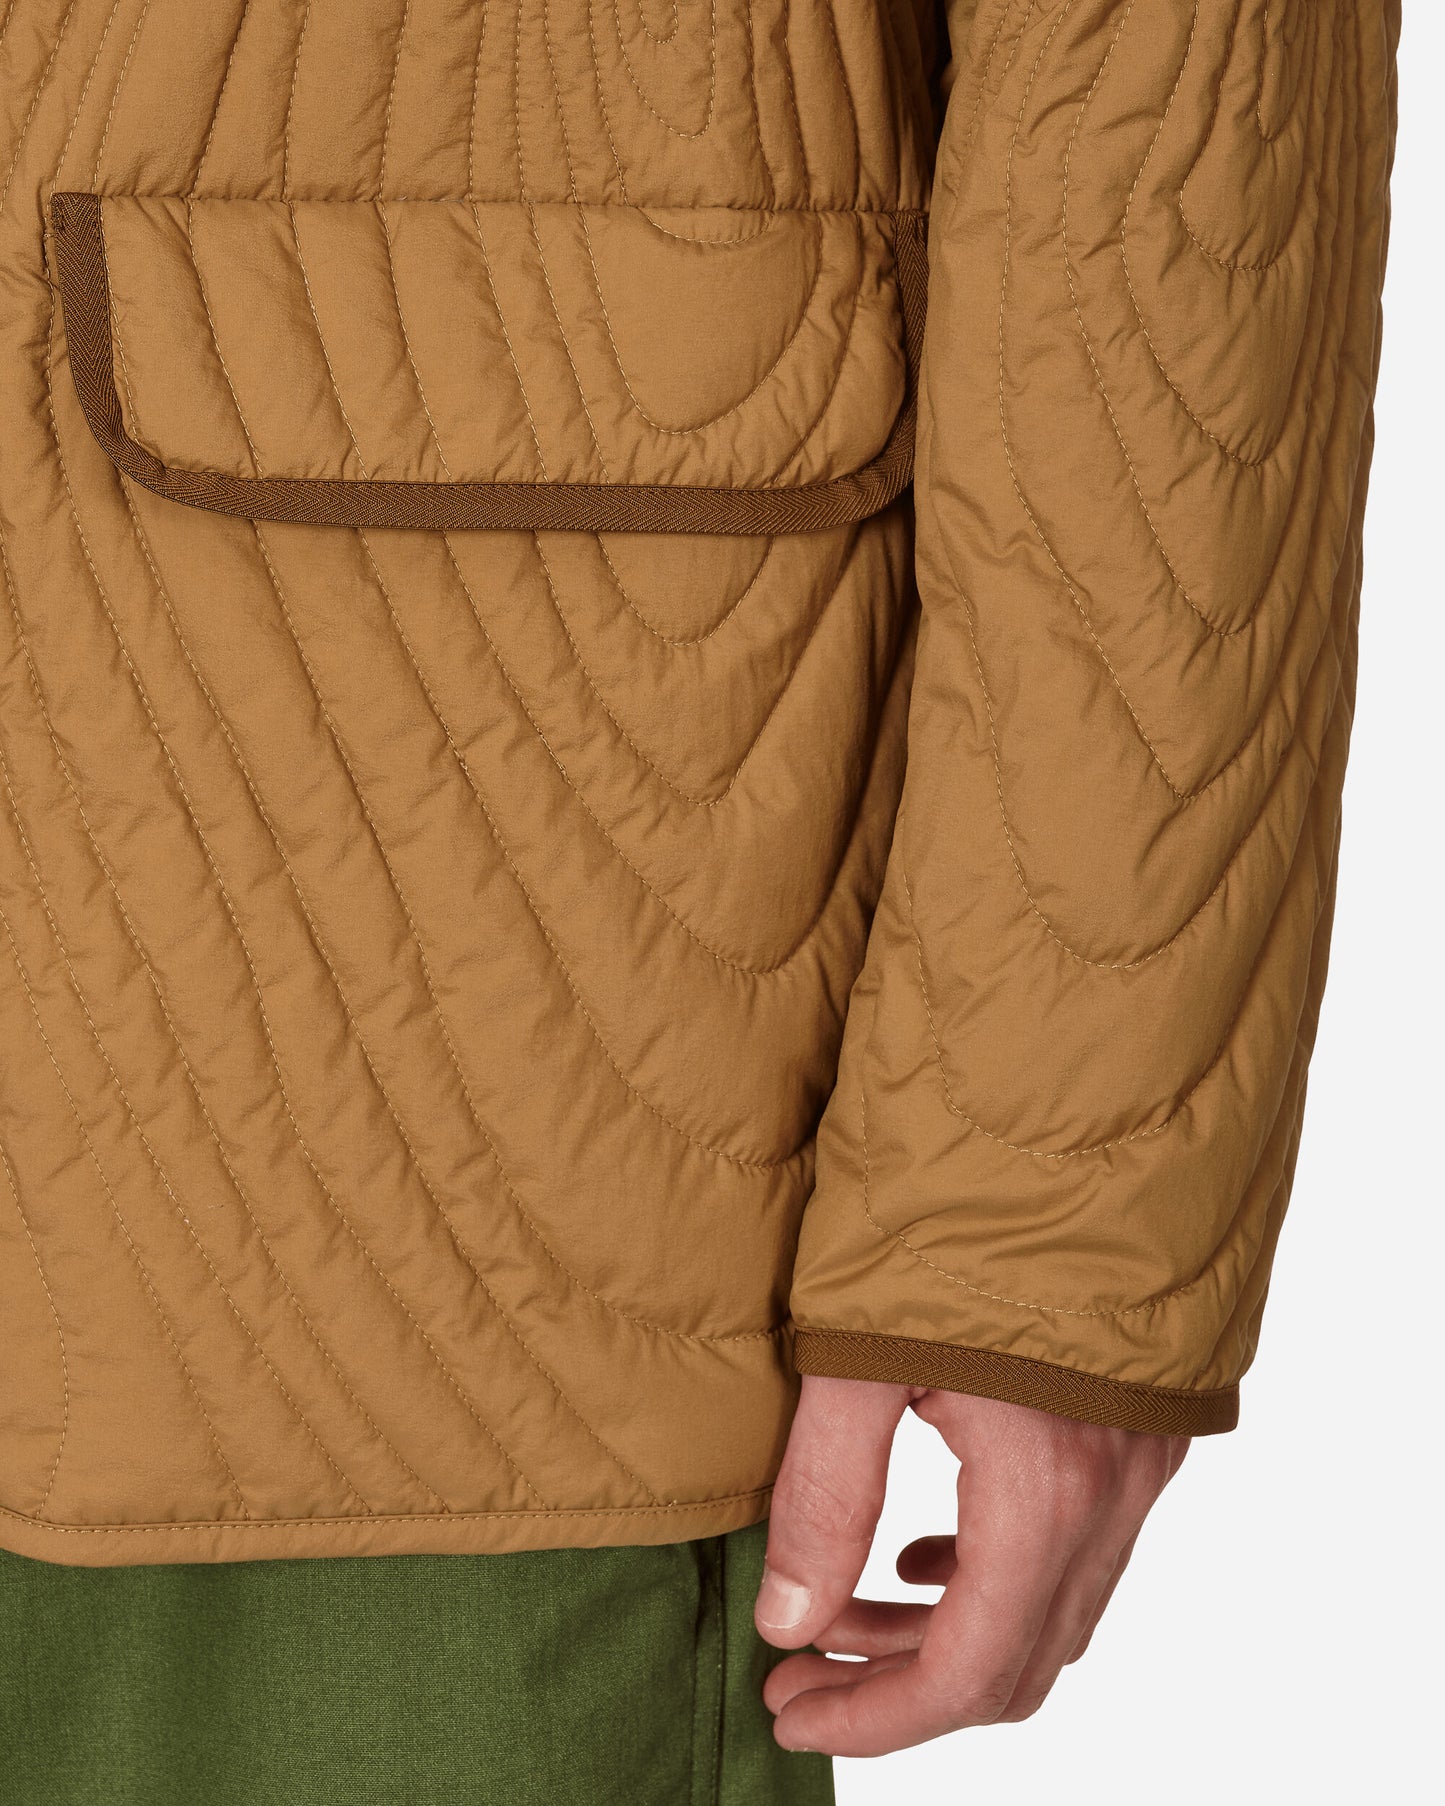 Moncler Genius Harter-Heighway Jacket X Salehe Bembury Brown Coats and Jackets Jackets 1A00004M3224 24N